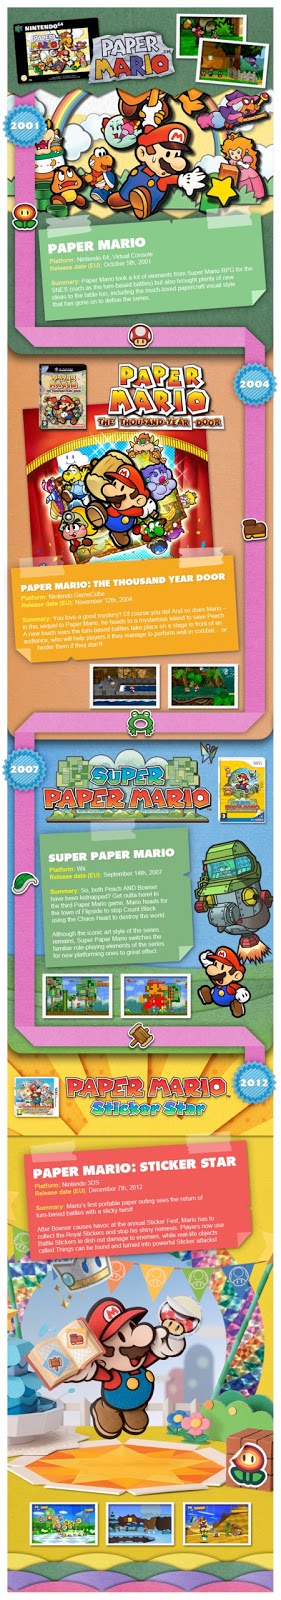 Paper Mario Sticker Star Infographic